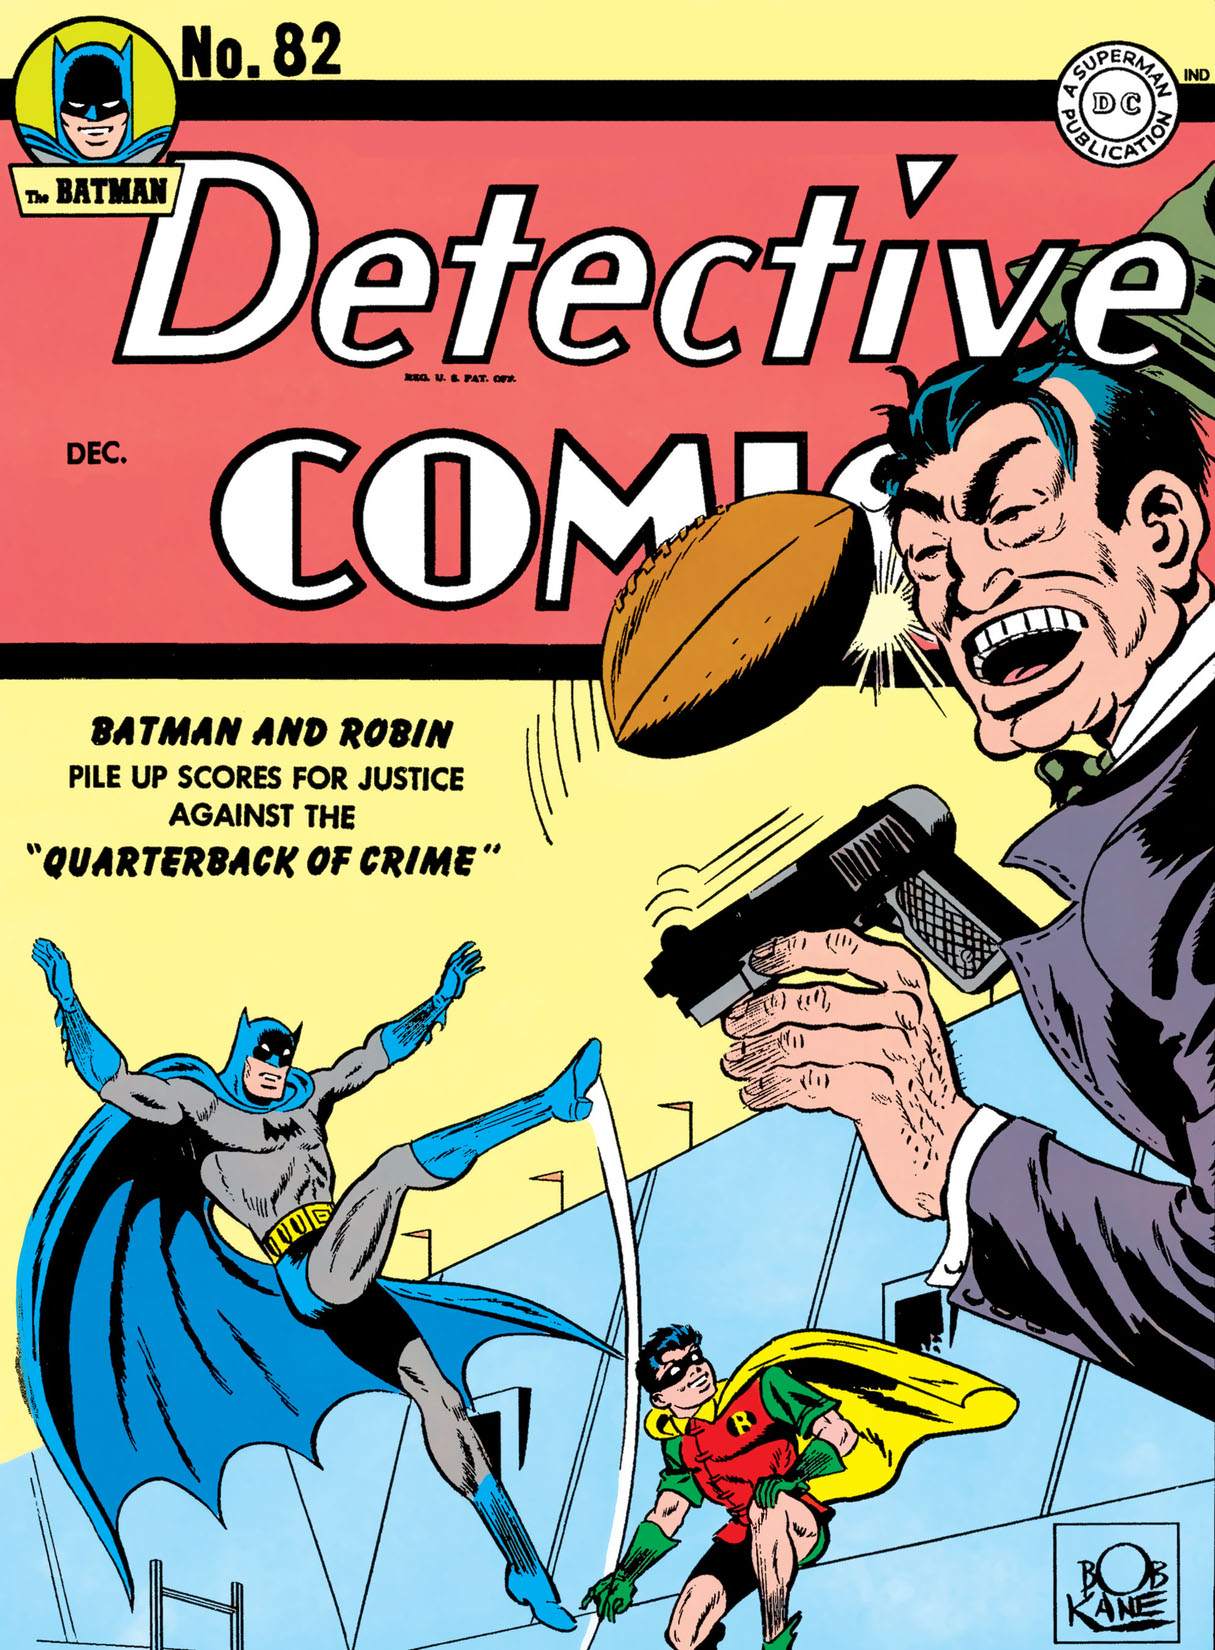 Detective Comics (1937-) #82 preview images